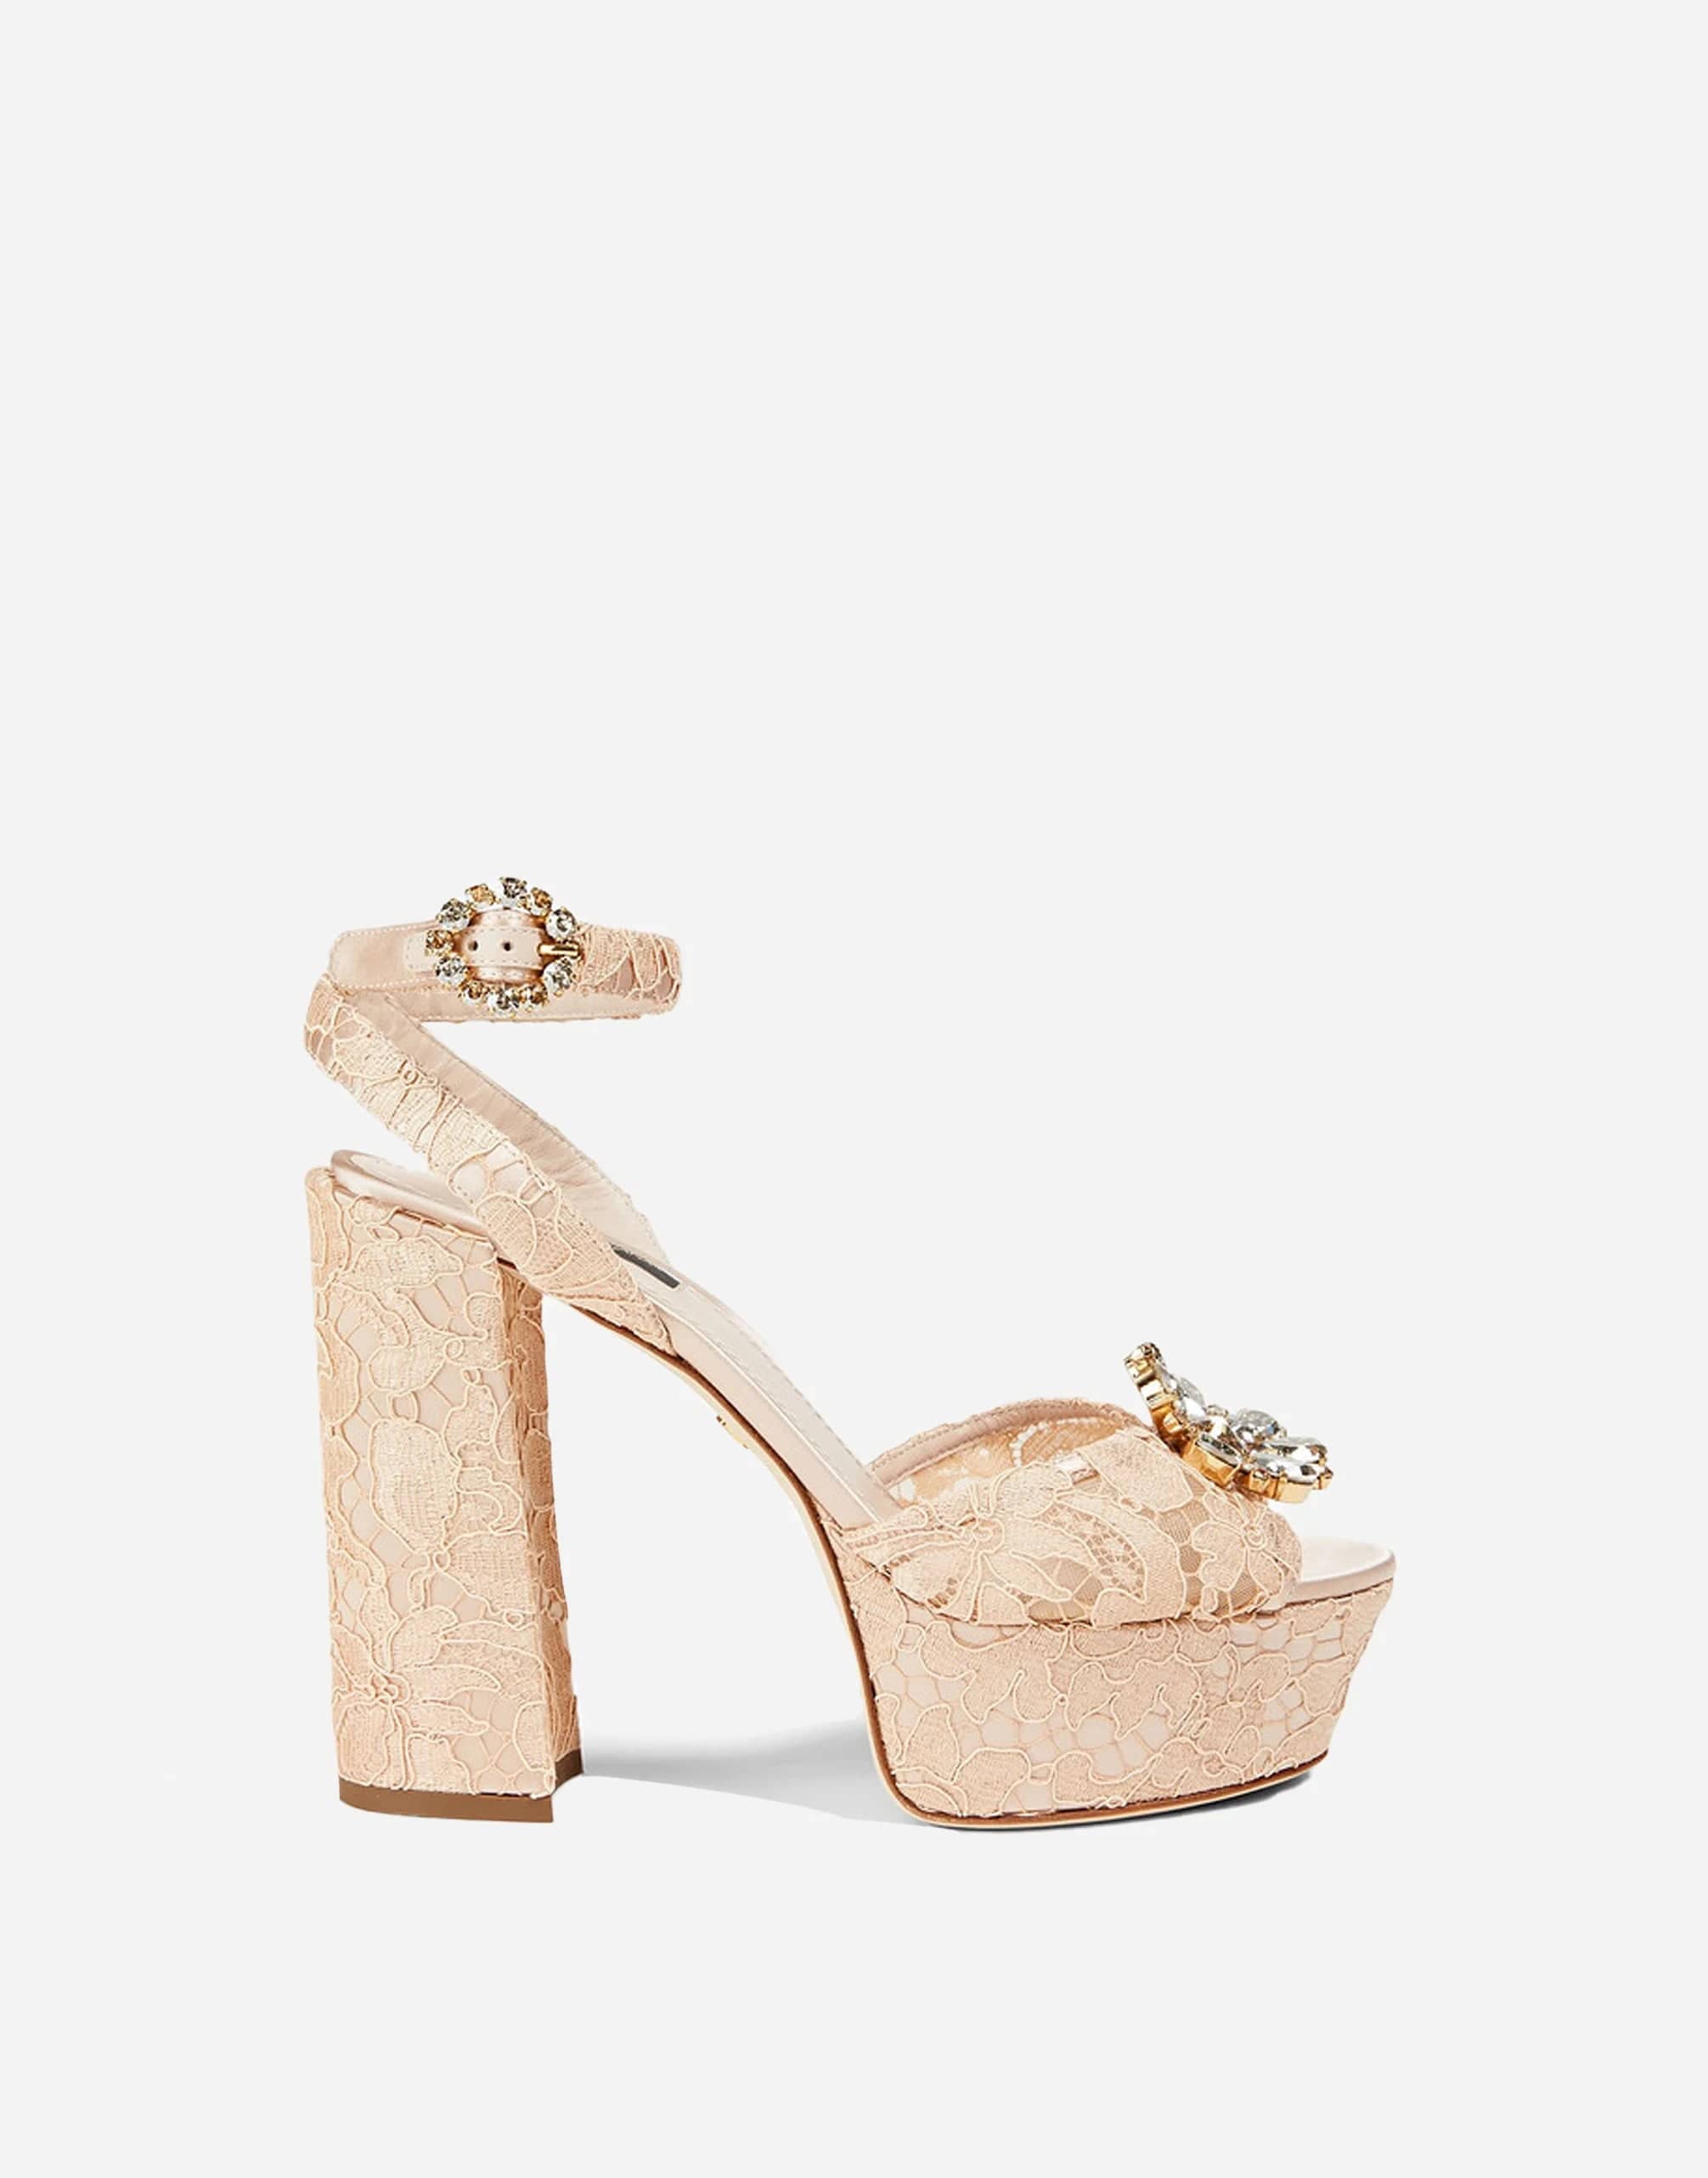 Dolce & Gabbana Corded Lace Platform Sandals